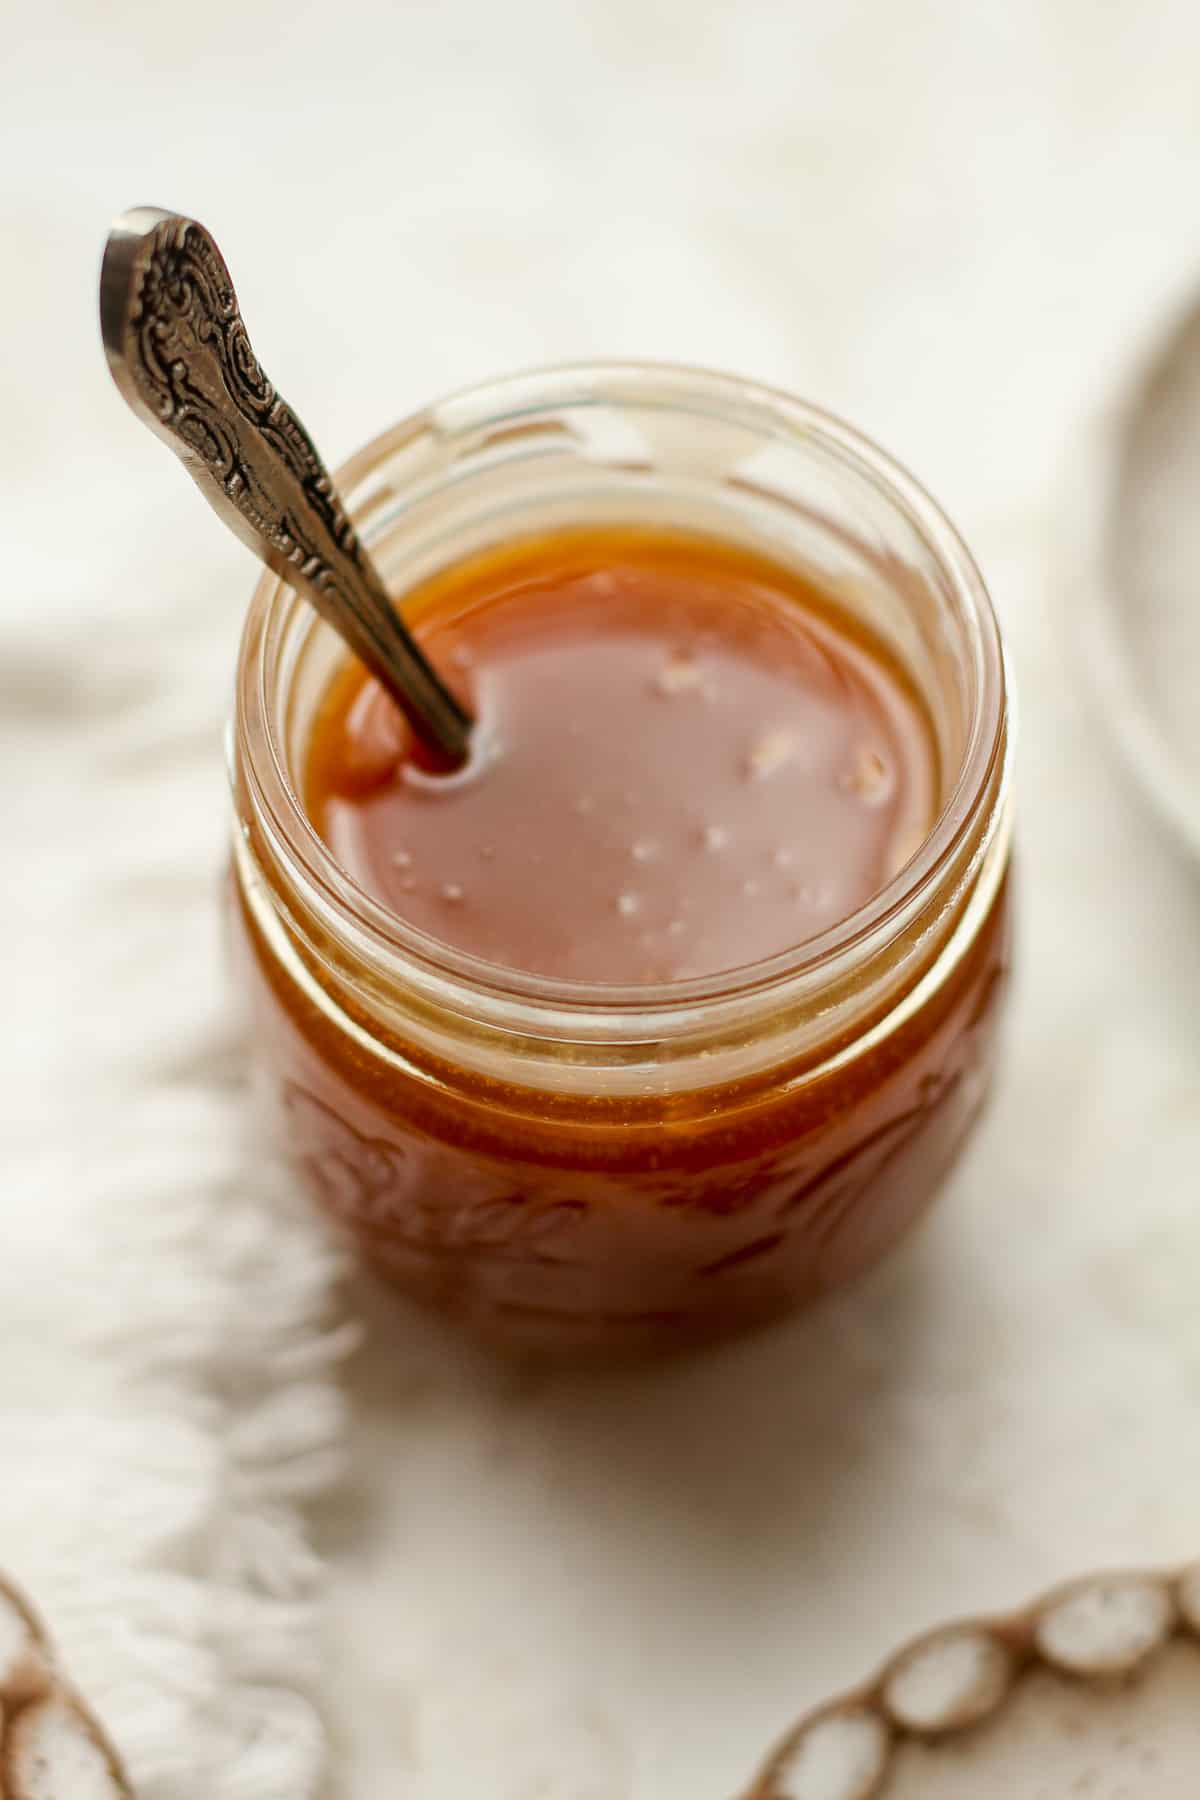 A jar of homemade caramel sauce with a spoon.